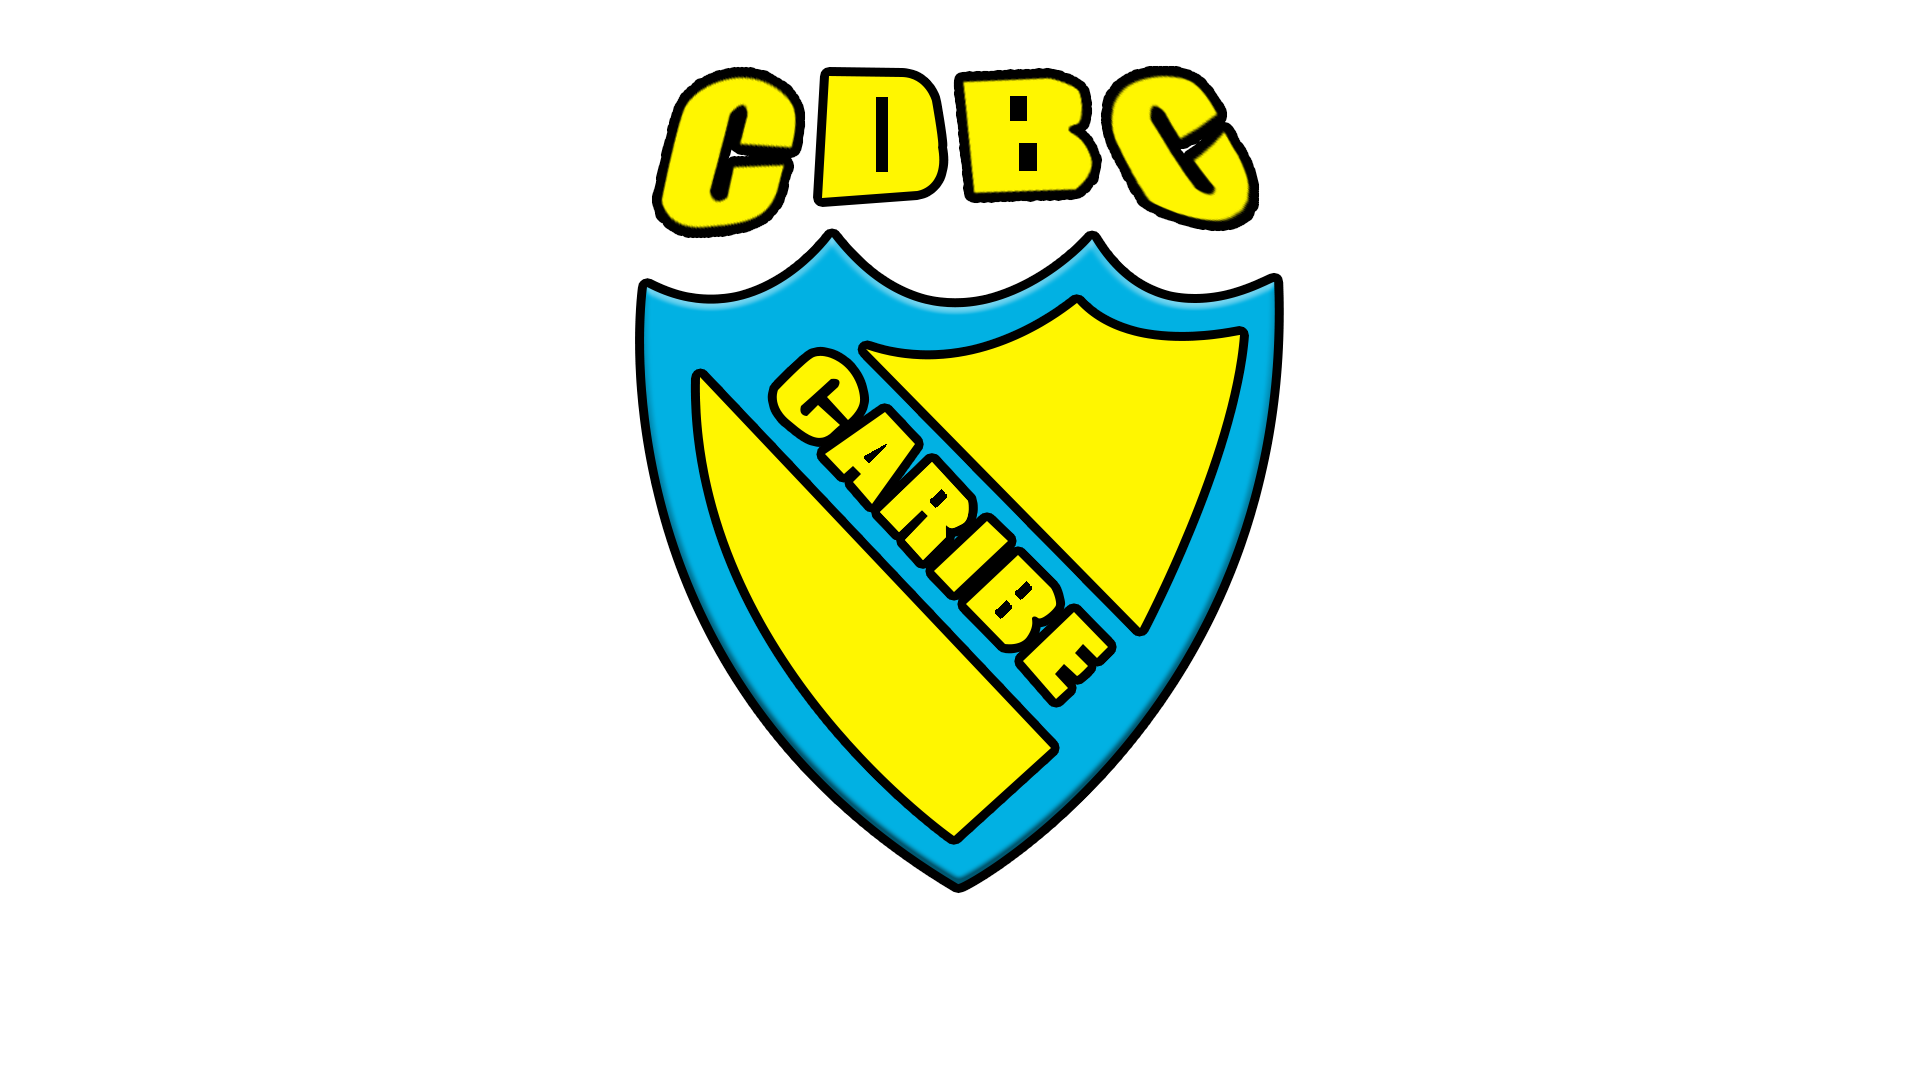 bahiacaribeclub.com | Escuela de futbol Bahia caribe | Escuela de fútbol Caribe Apartadó | Mas que un Club una Familia